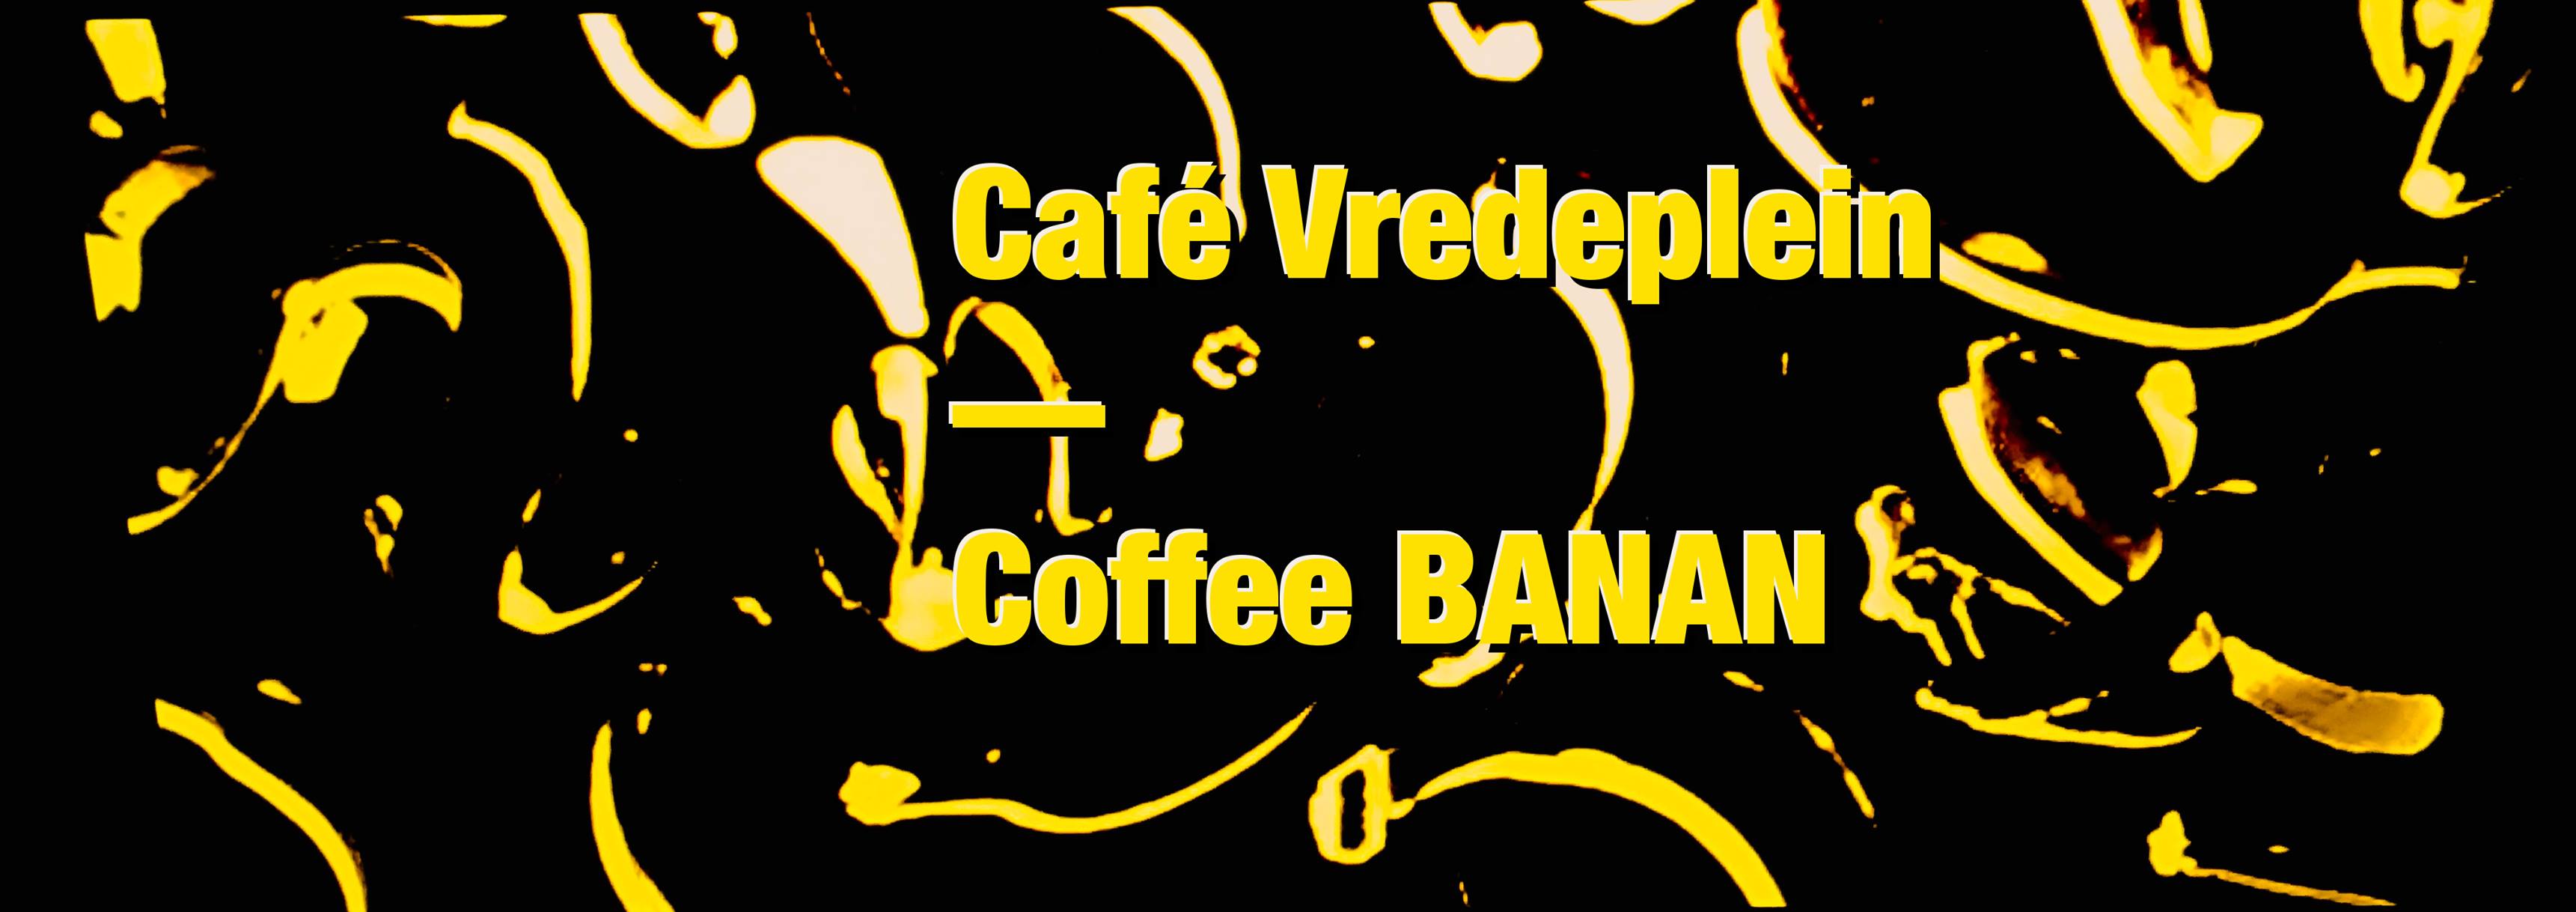 18 09 20 Coffee BananCafé Vredeplein Zaterdag 22 september 2018